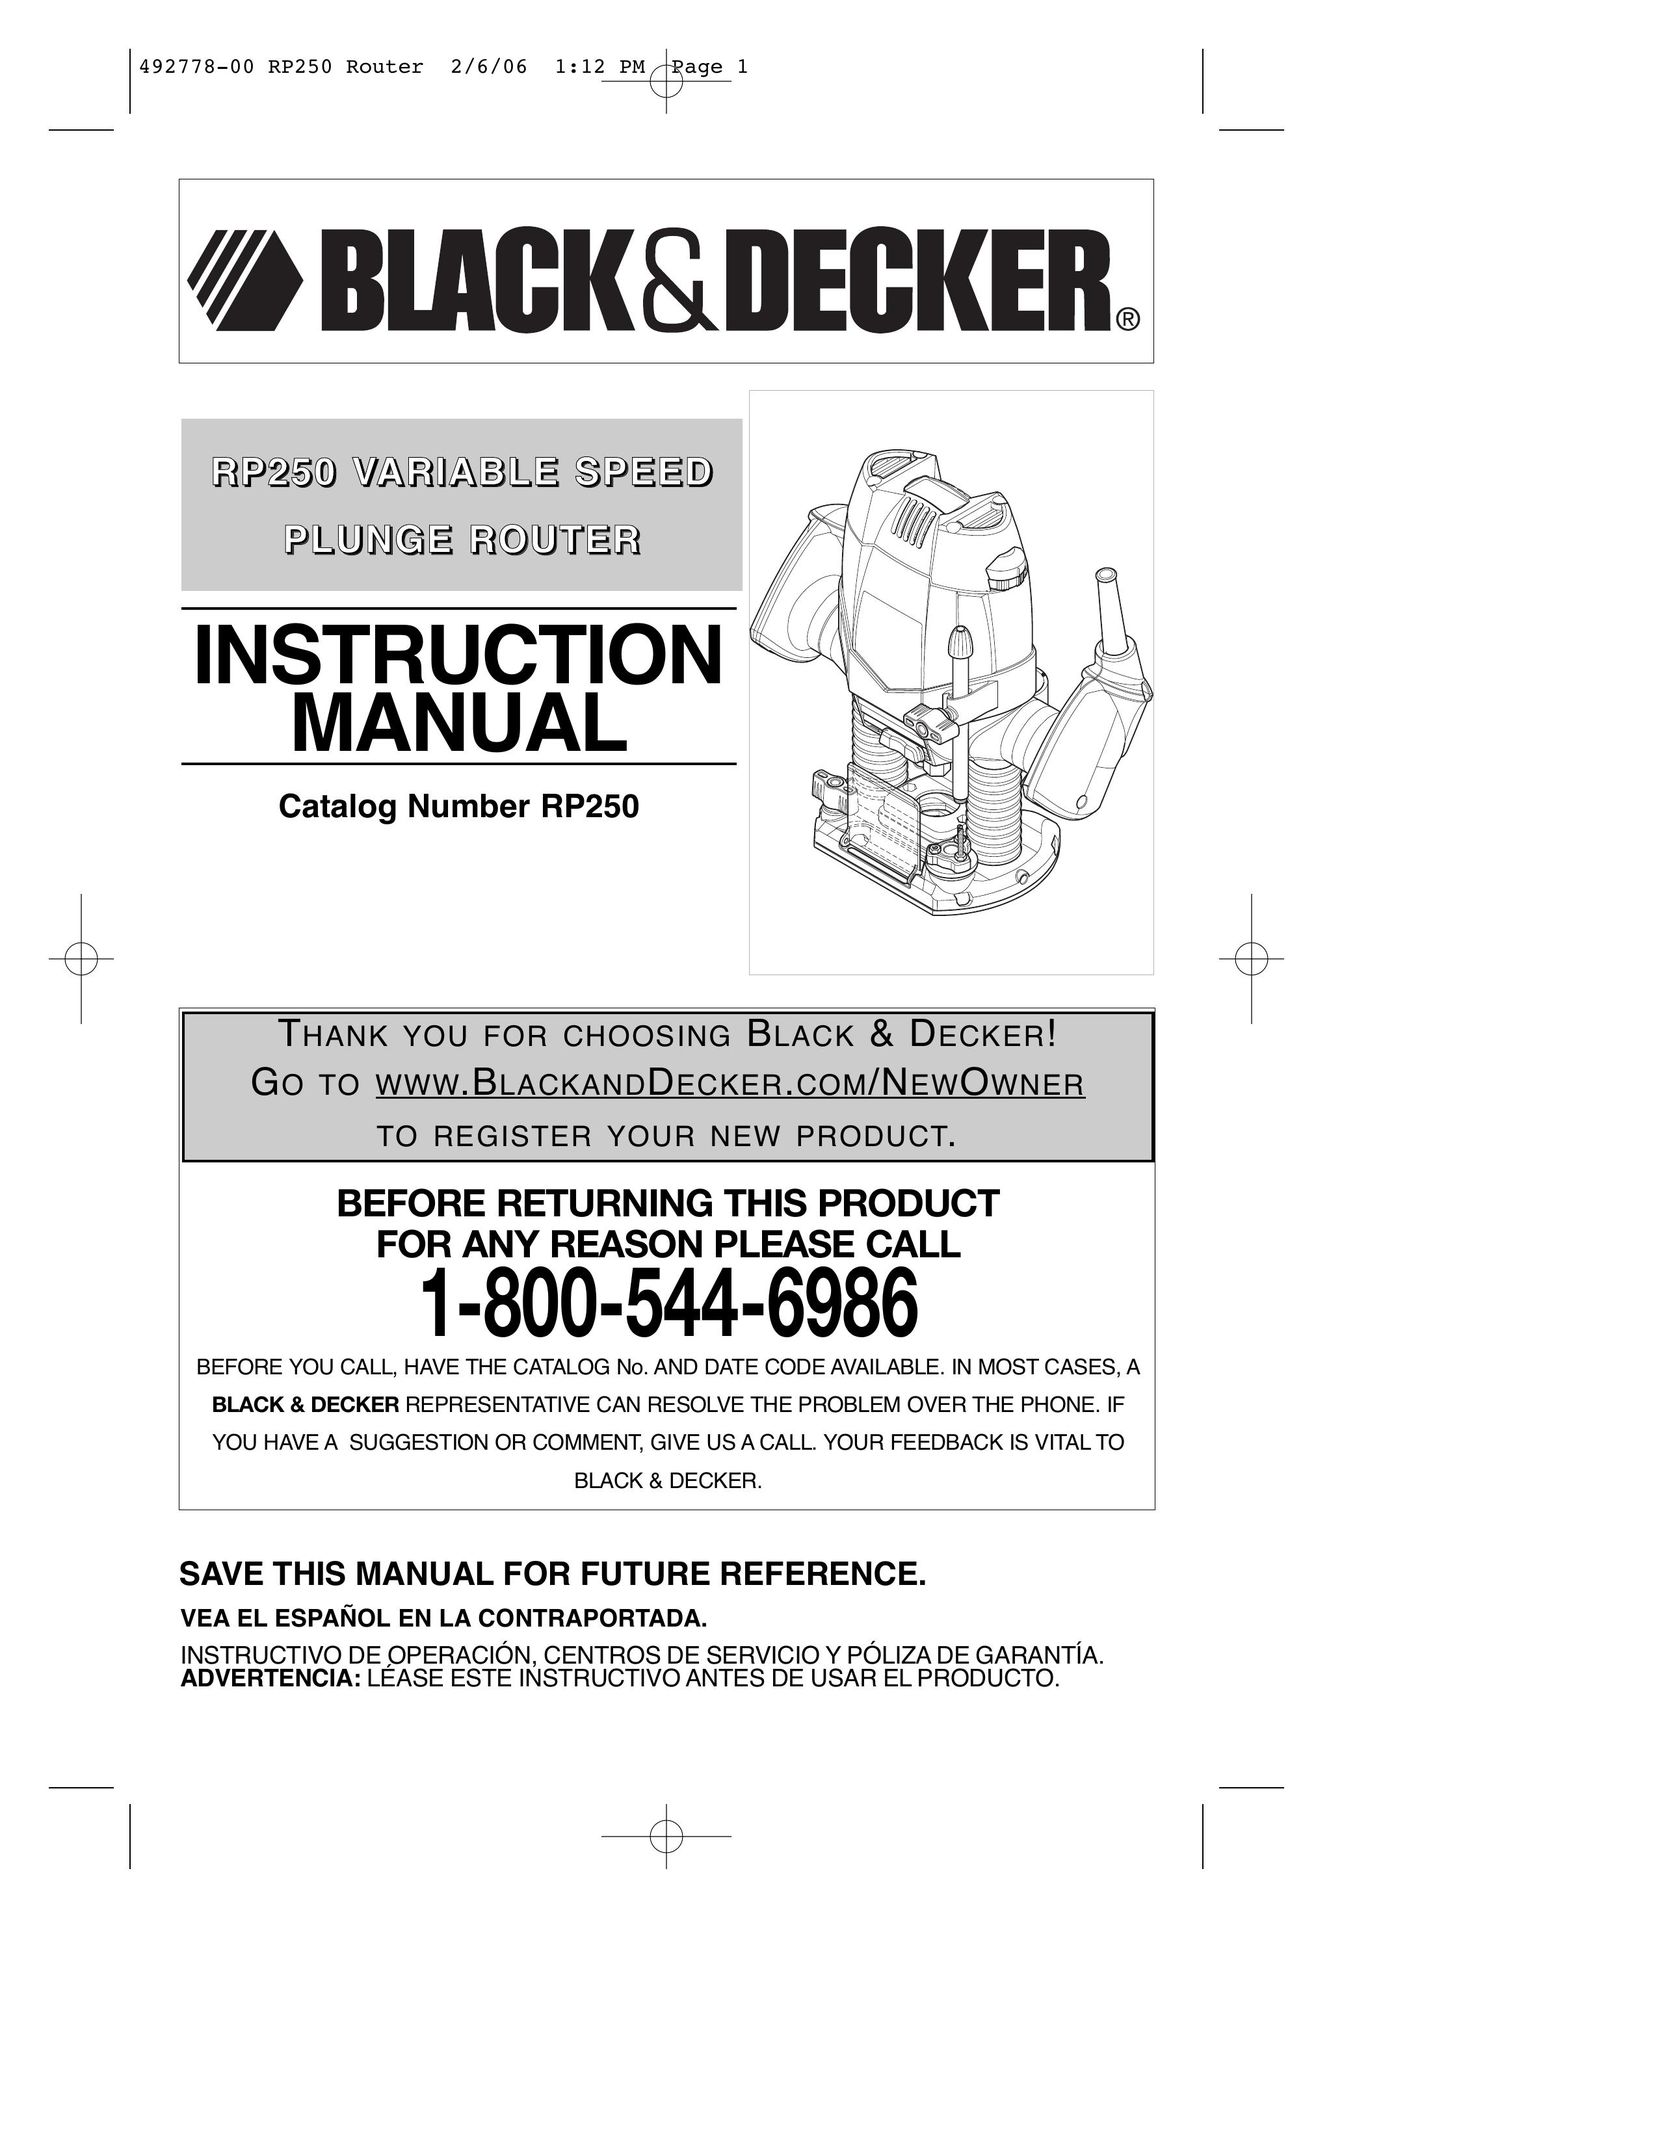 Black & Decker RP250 Router User Manual